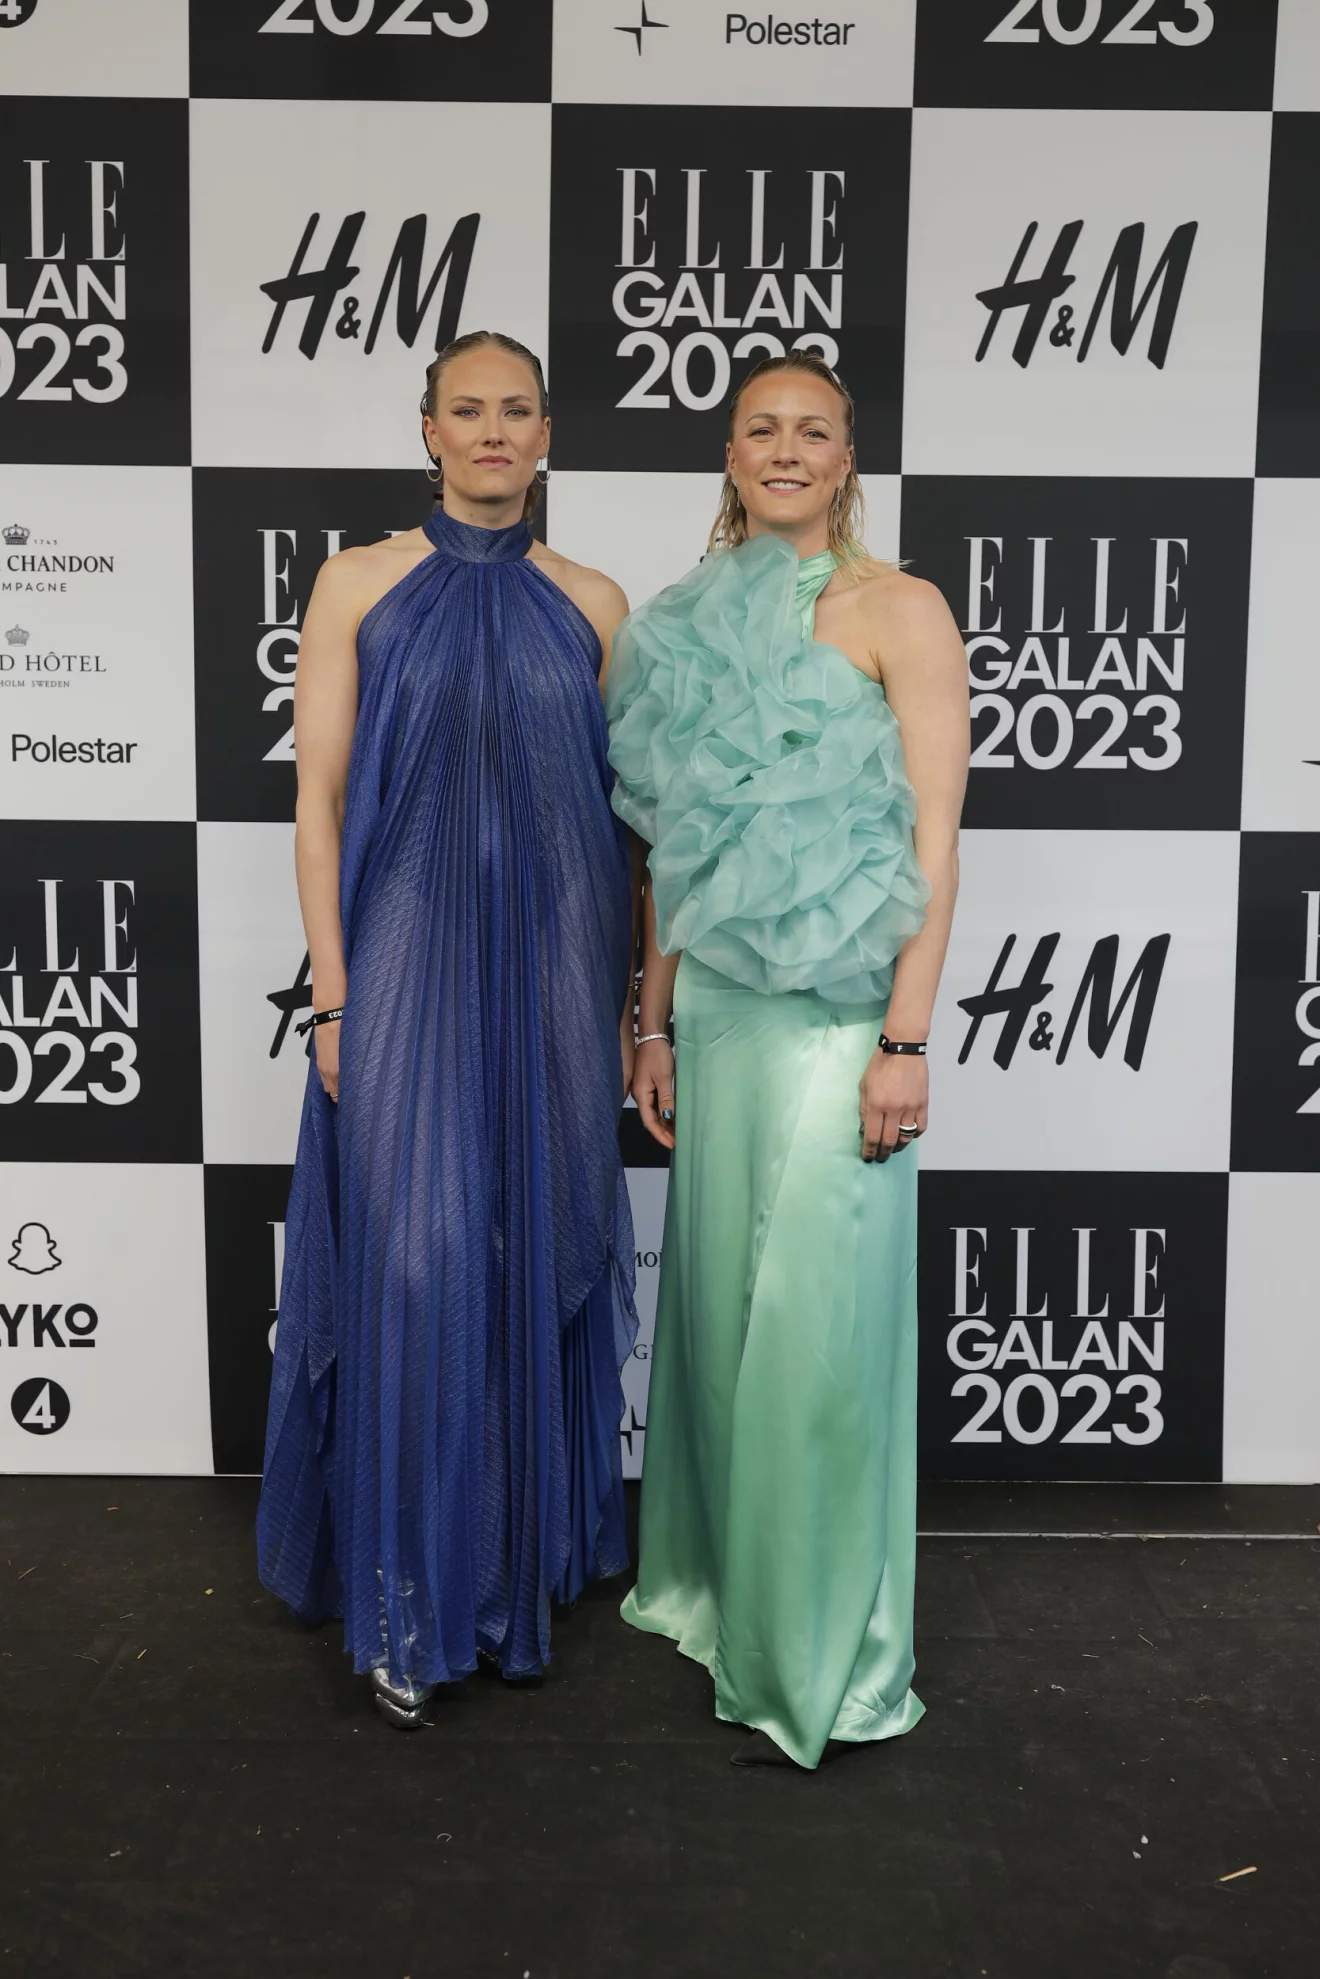 ELLE-galan 2023 röda mattan Michelle Coleman och Sarah Sjöström